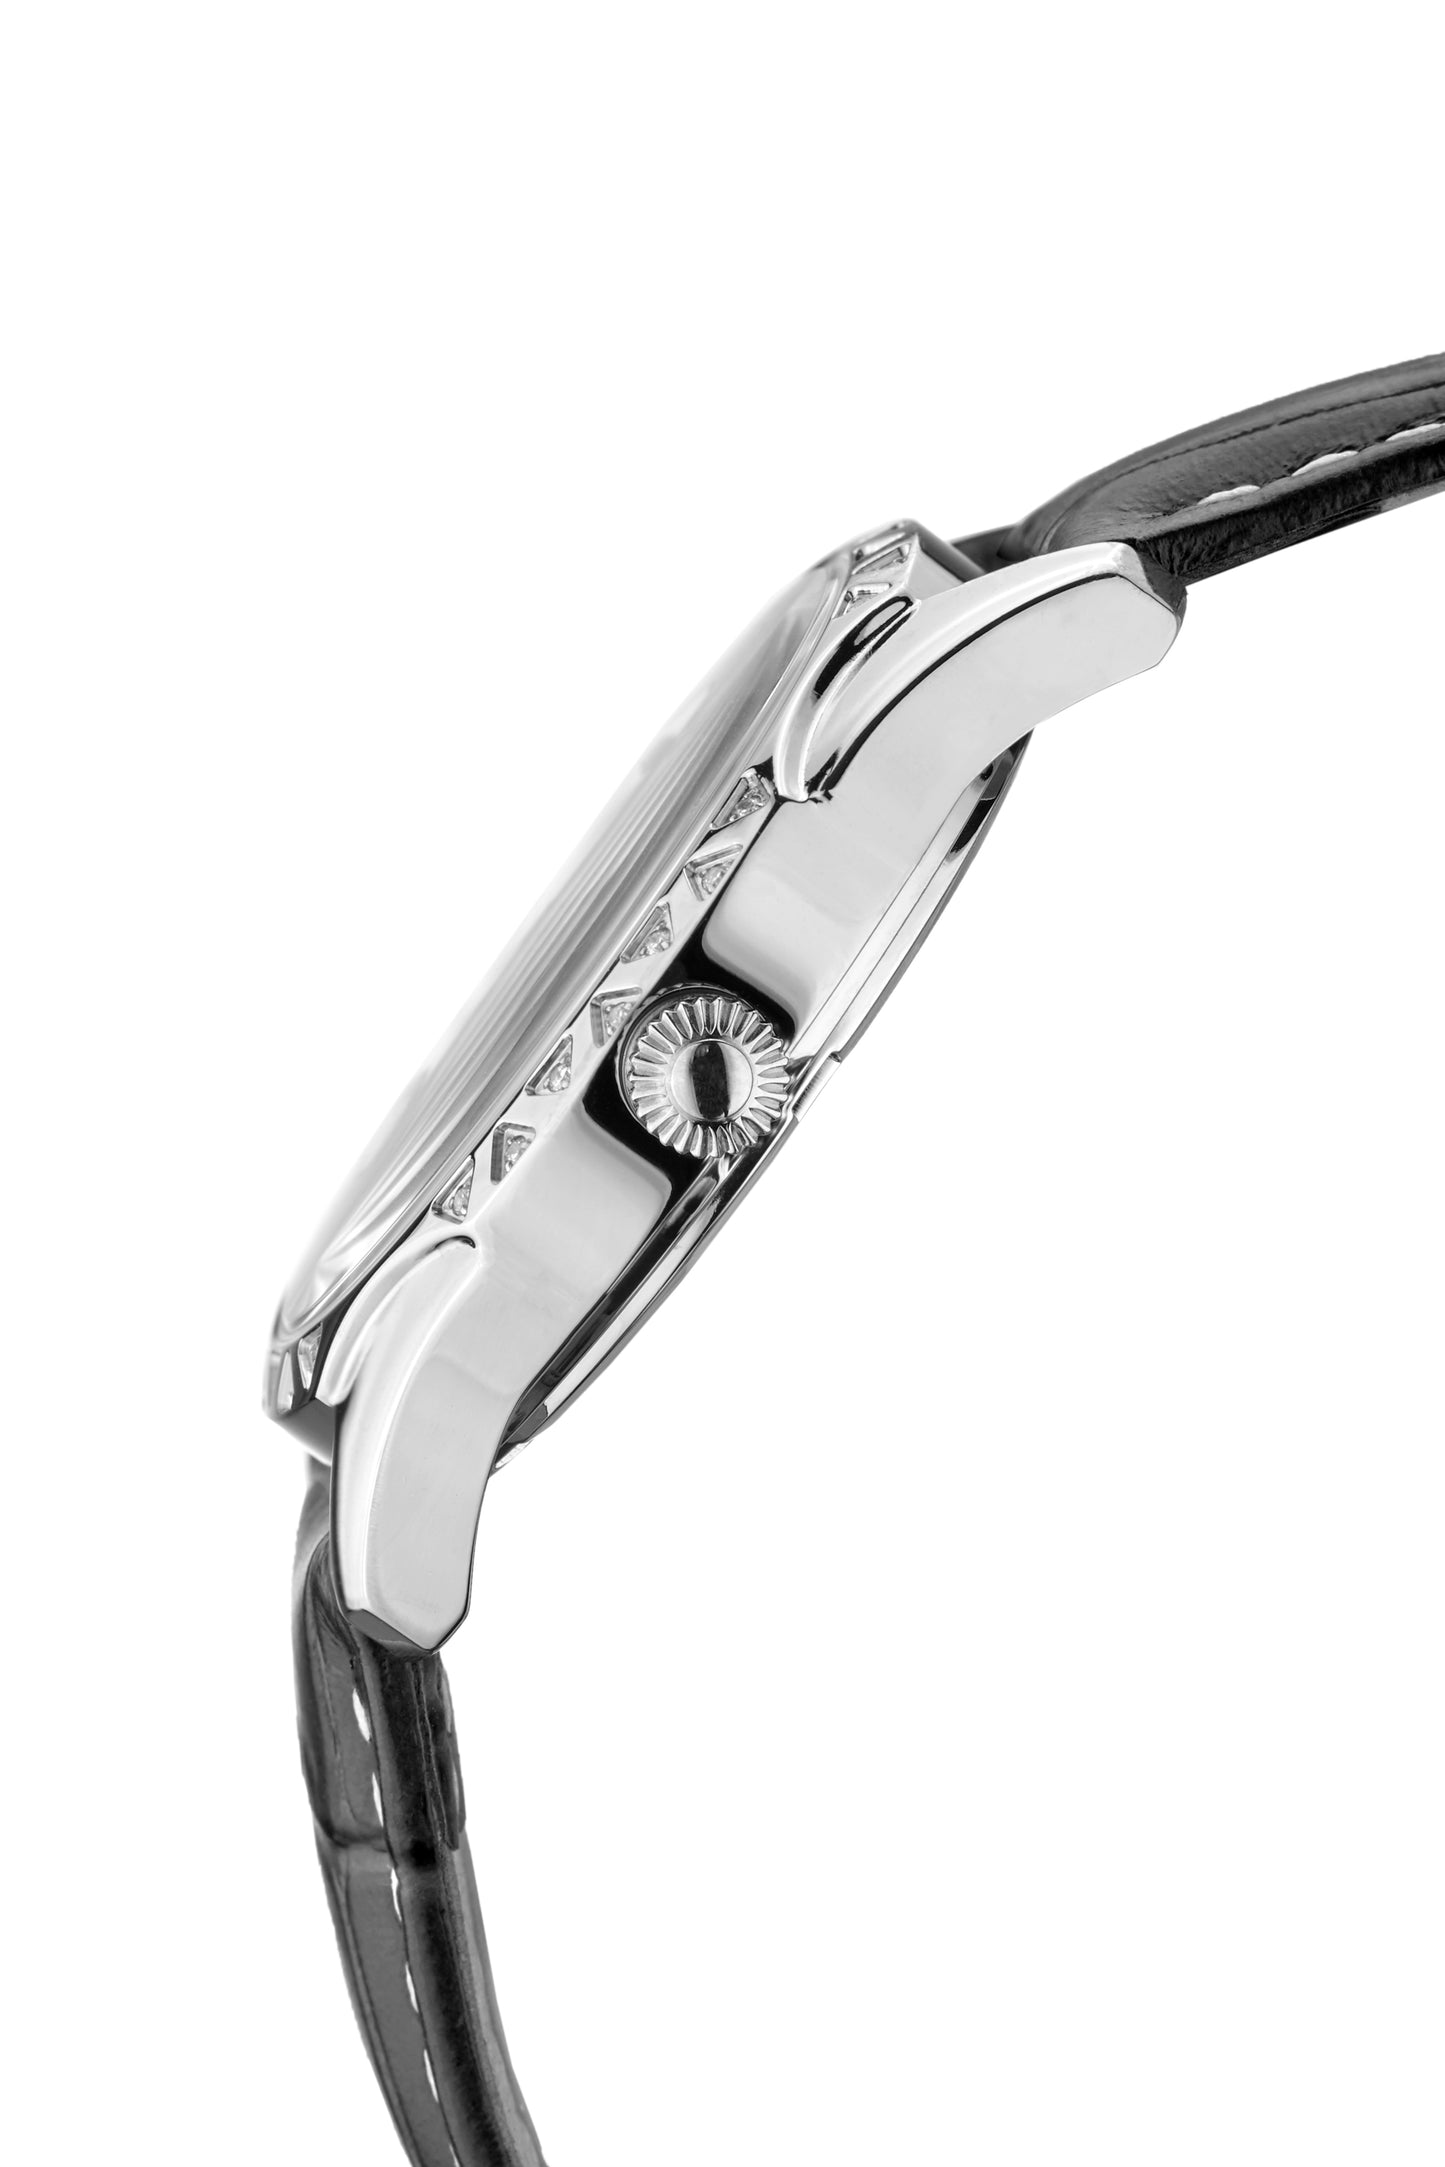 Automatic watches — Skylla — Chrono Diamond — steel silver black